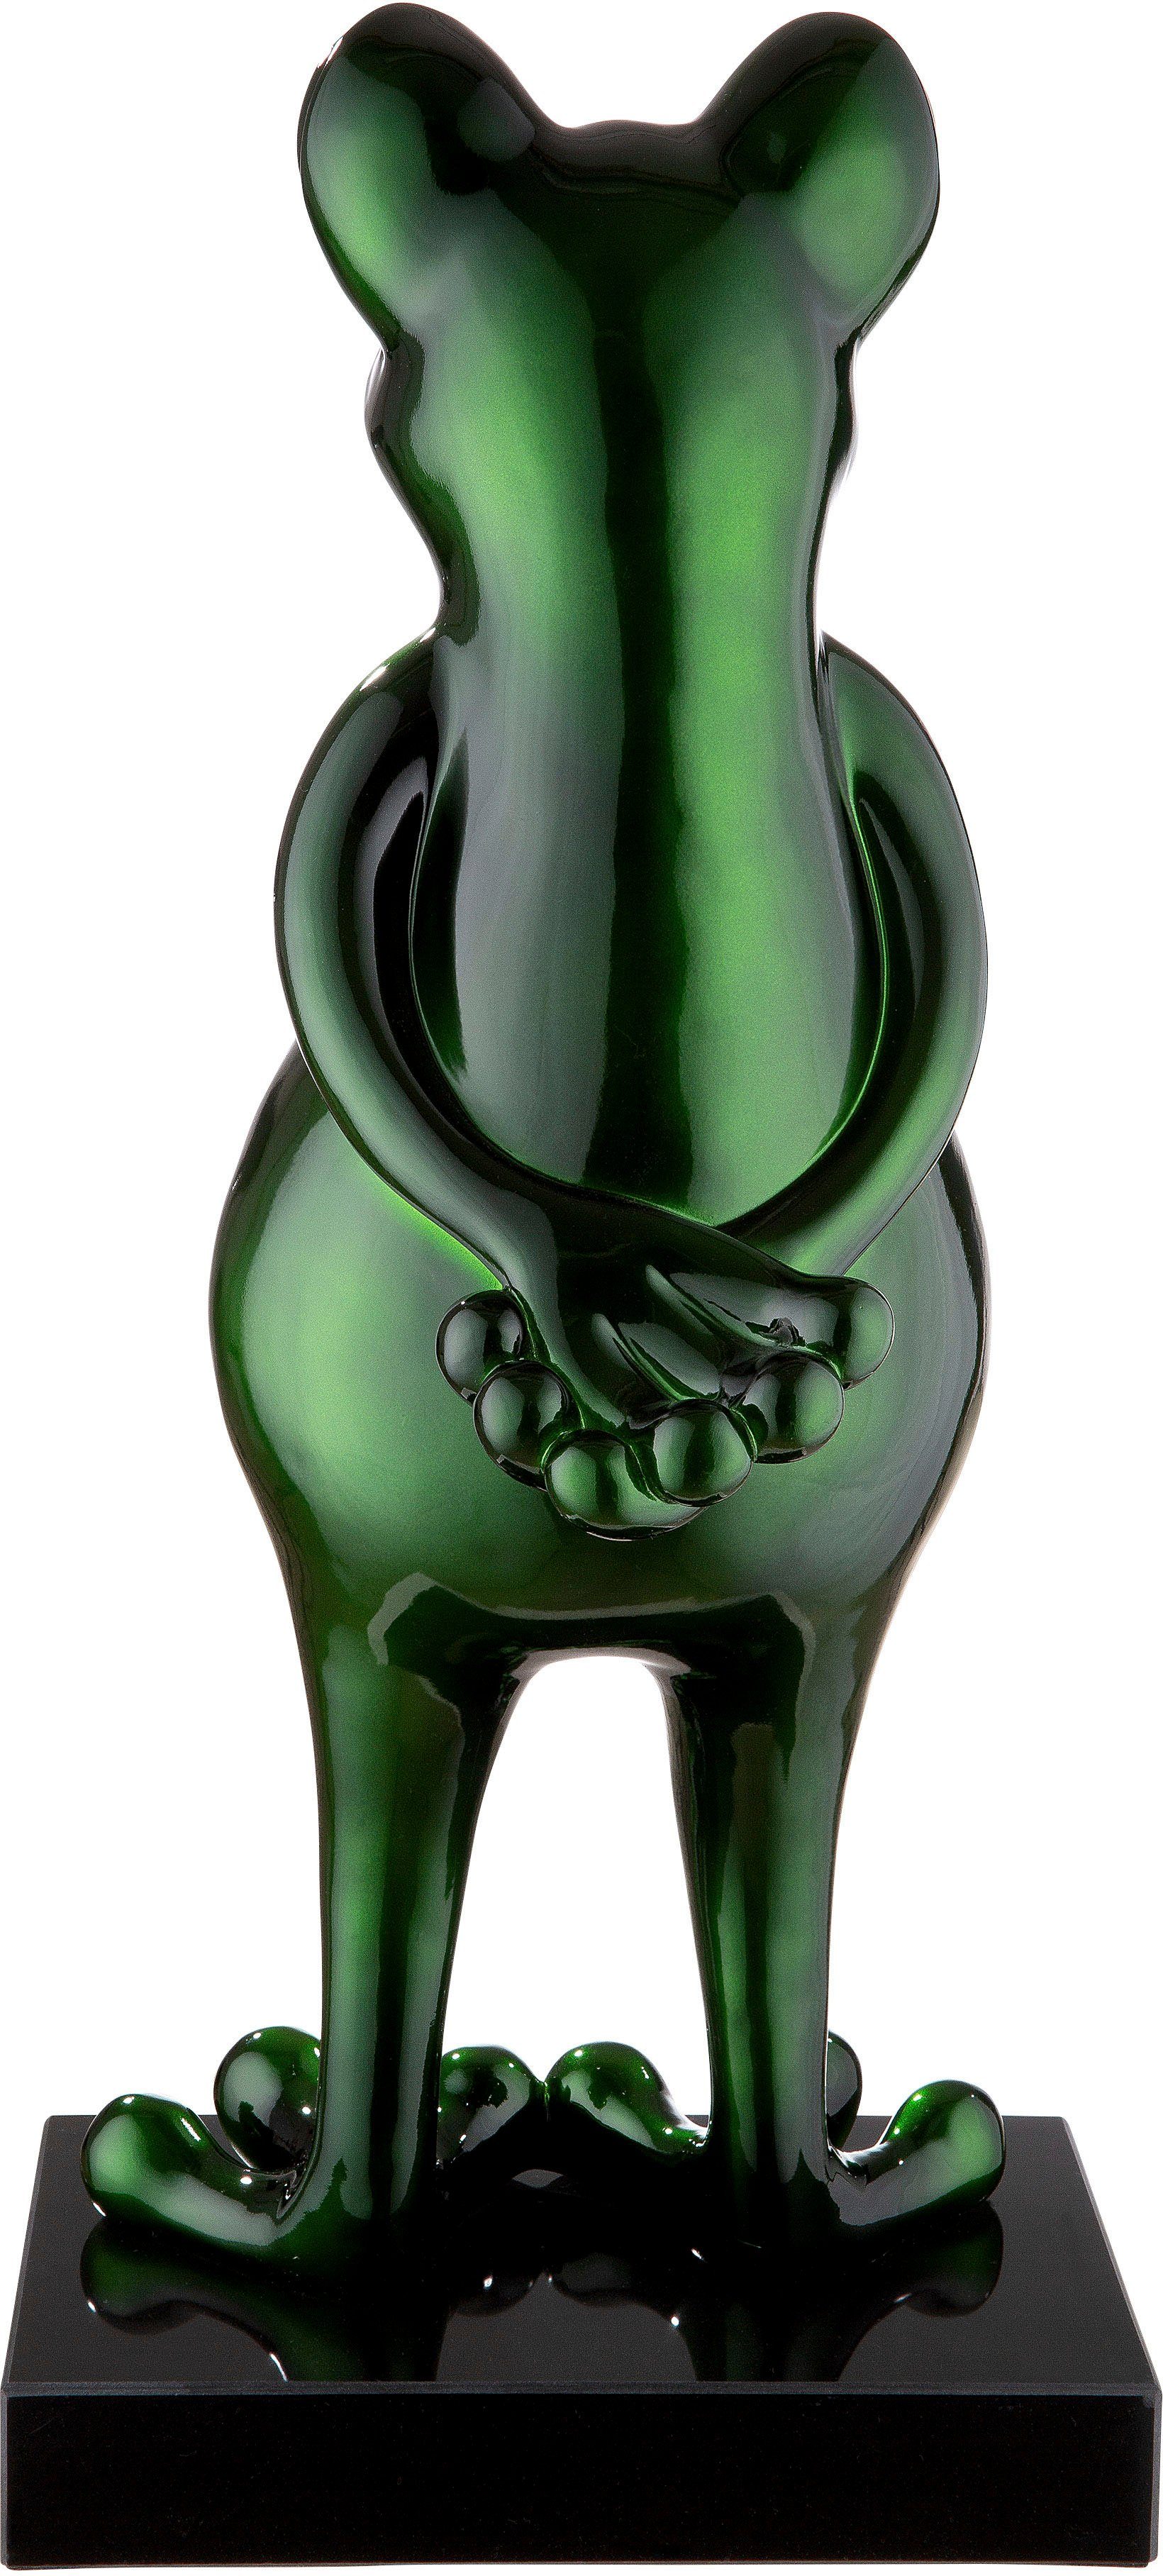 Gilde Marmorbase by Frog (1 Casablanca grün Skulptur St), auf Tierfigur